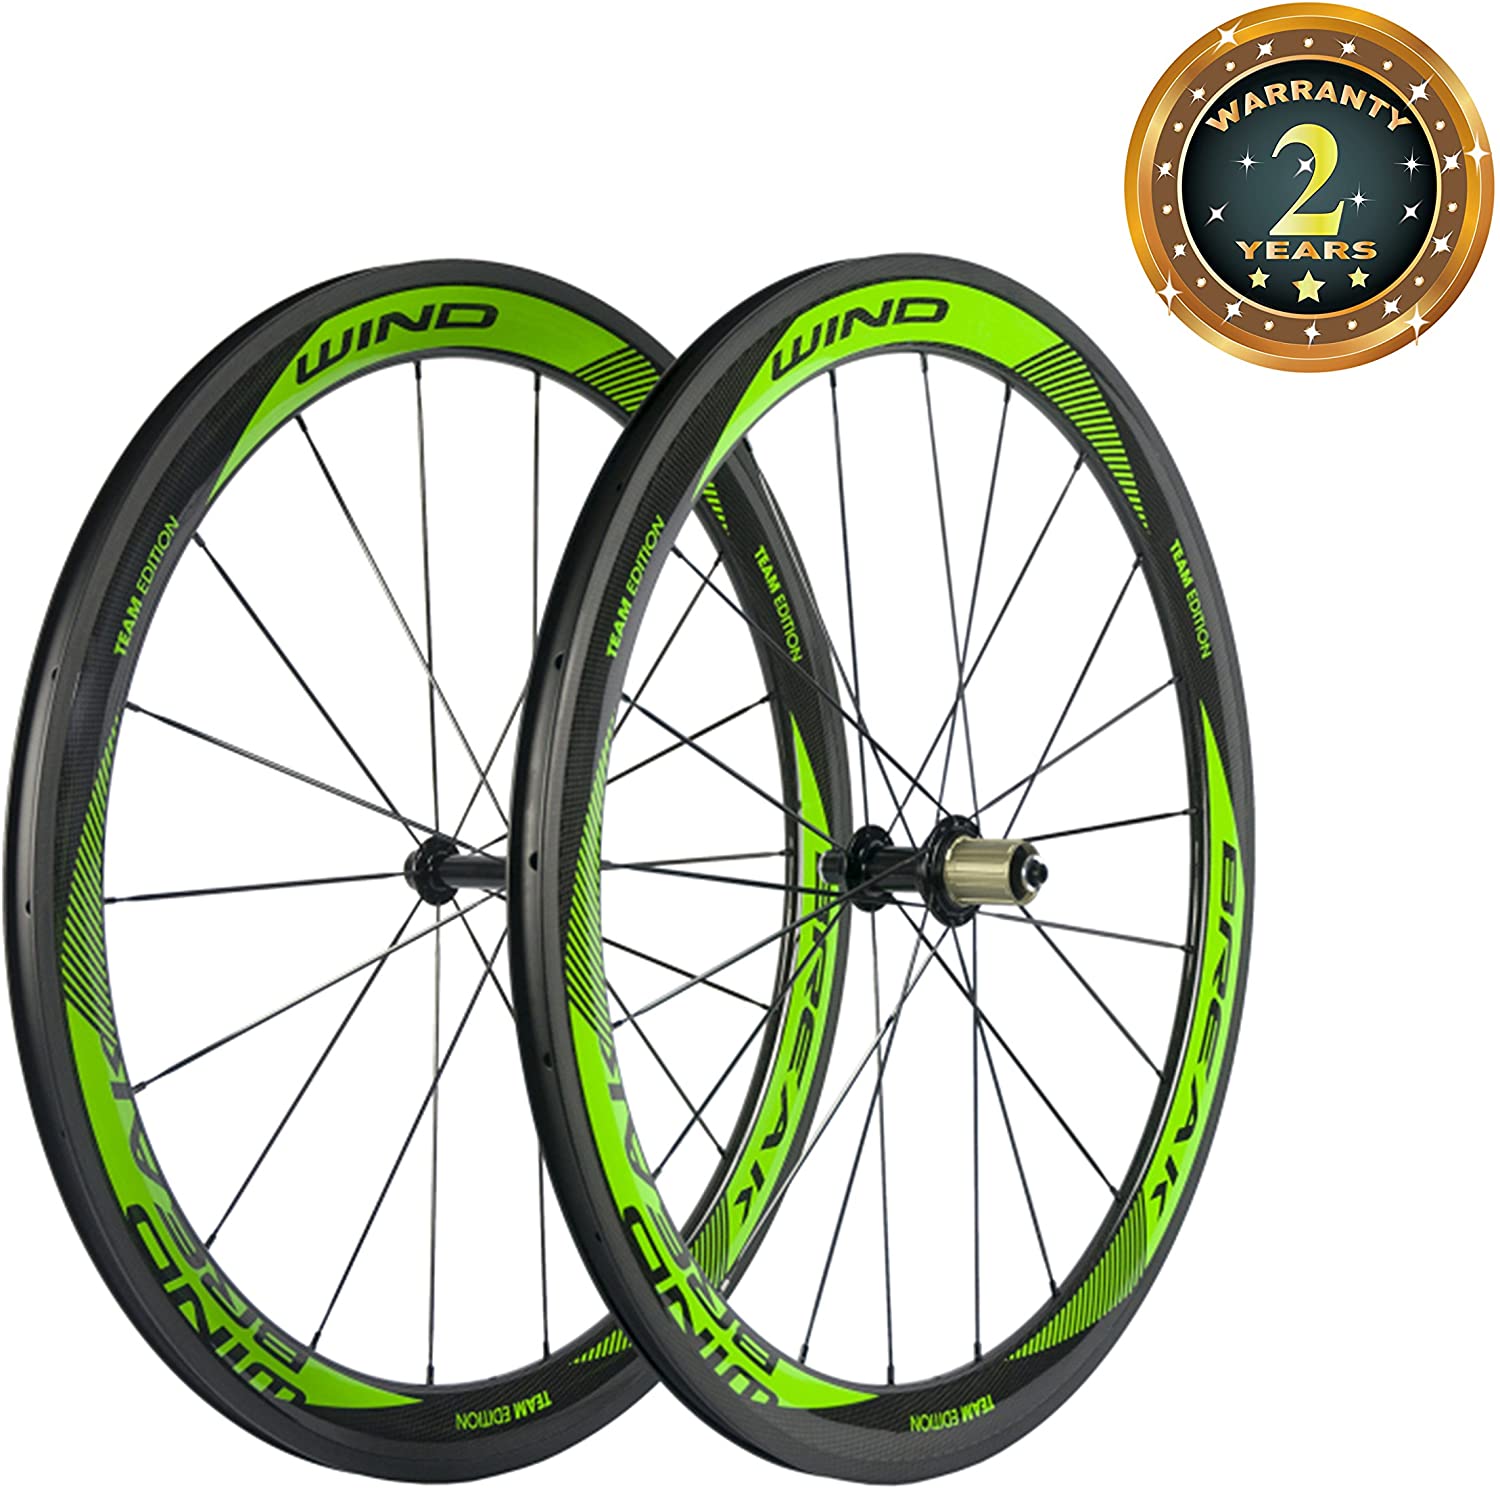 SunRise Bike Carbon Fiber Road Wheelset Clincher Wheels 50mm Depth R13 Hub Decal Bicycle Rims